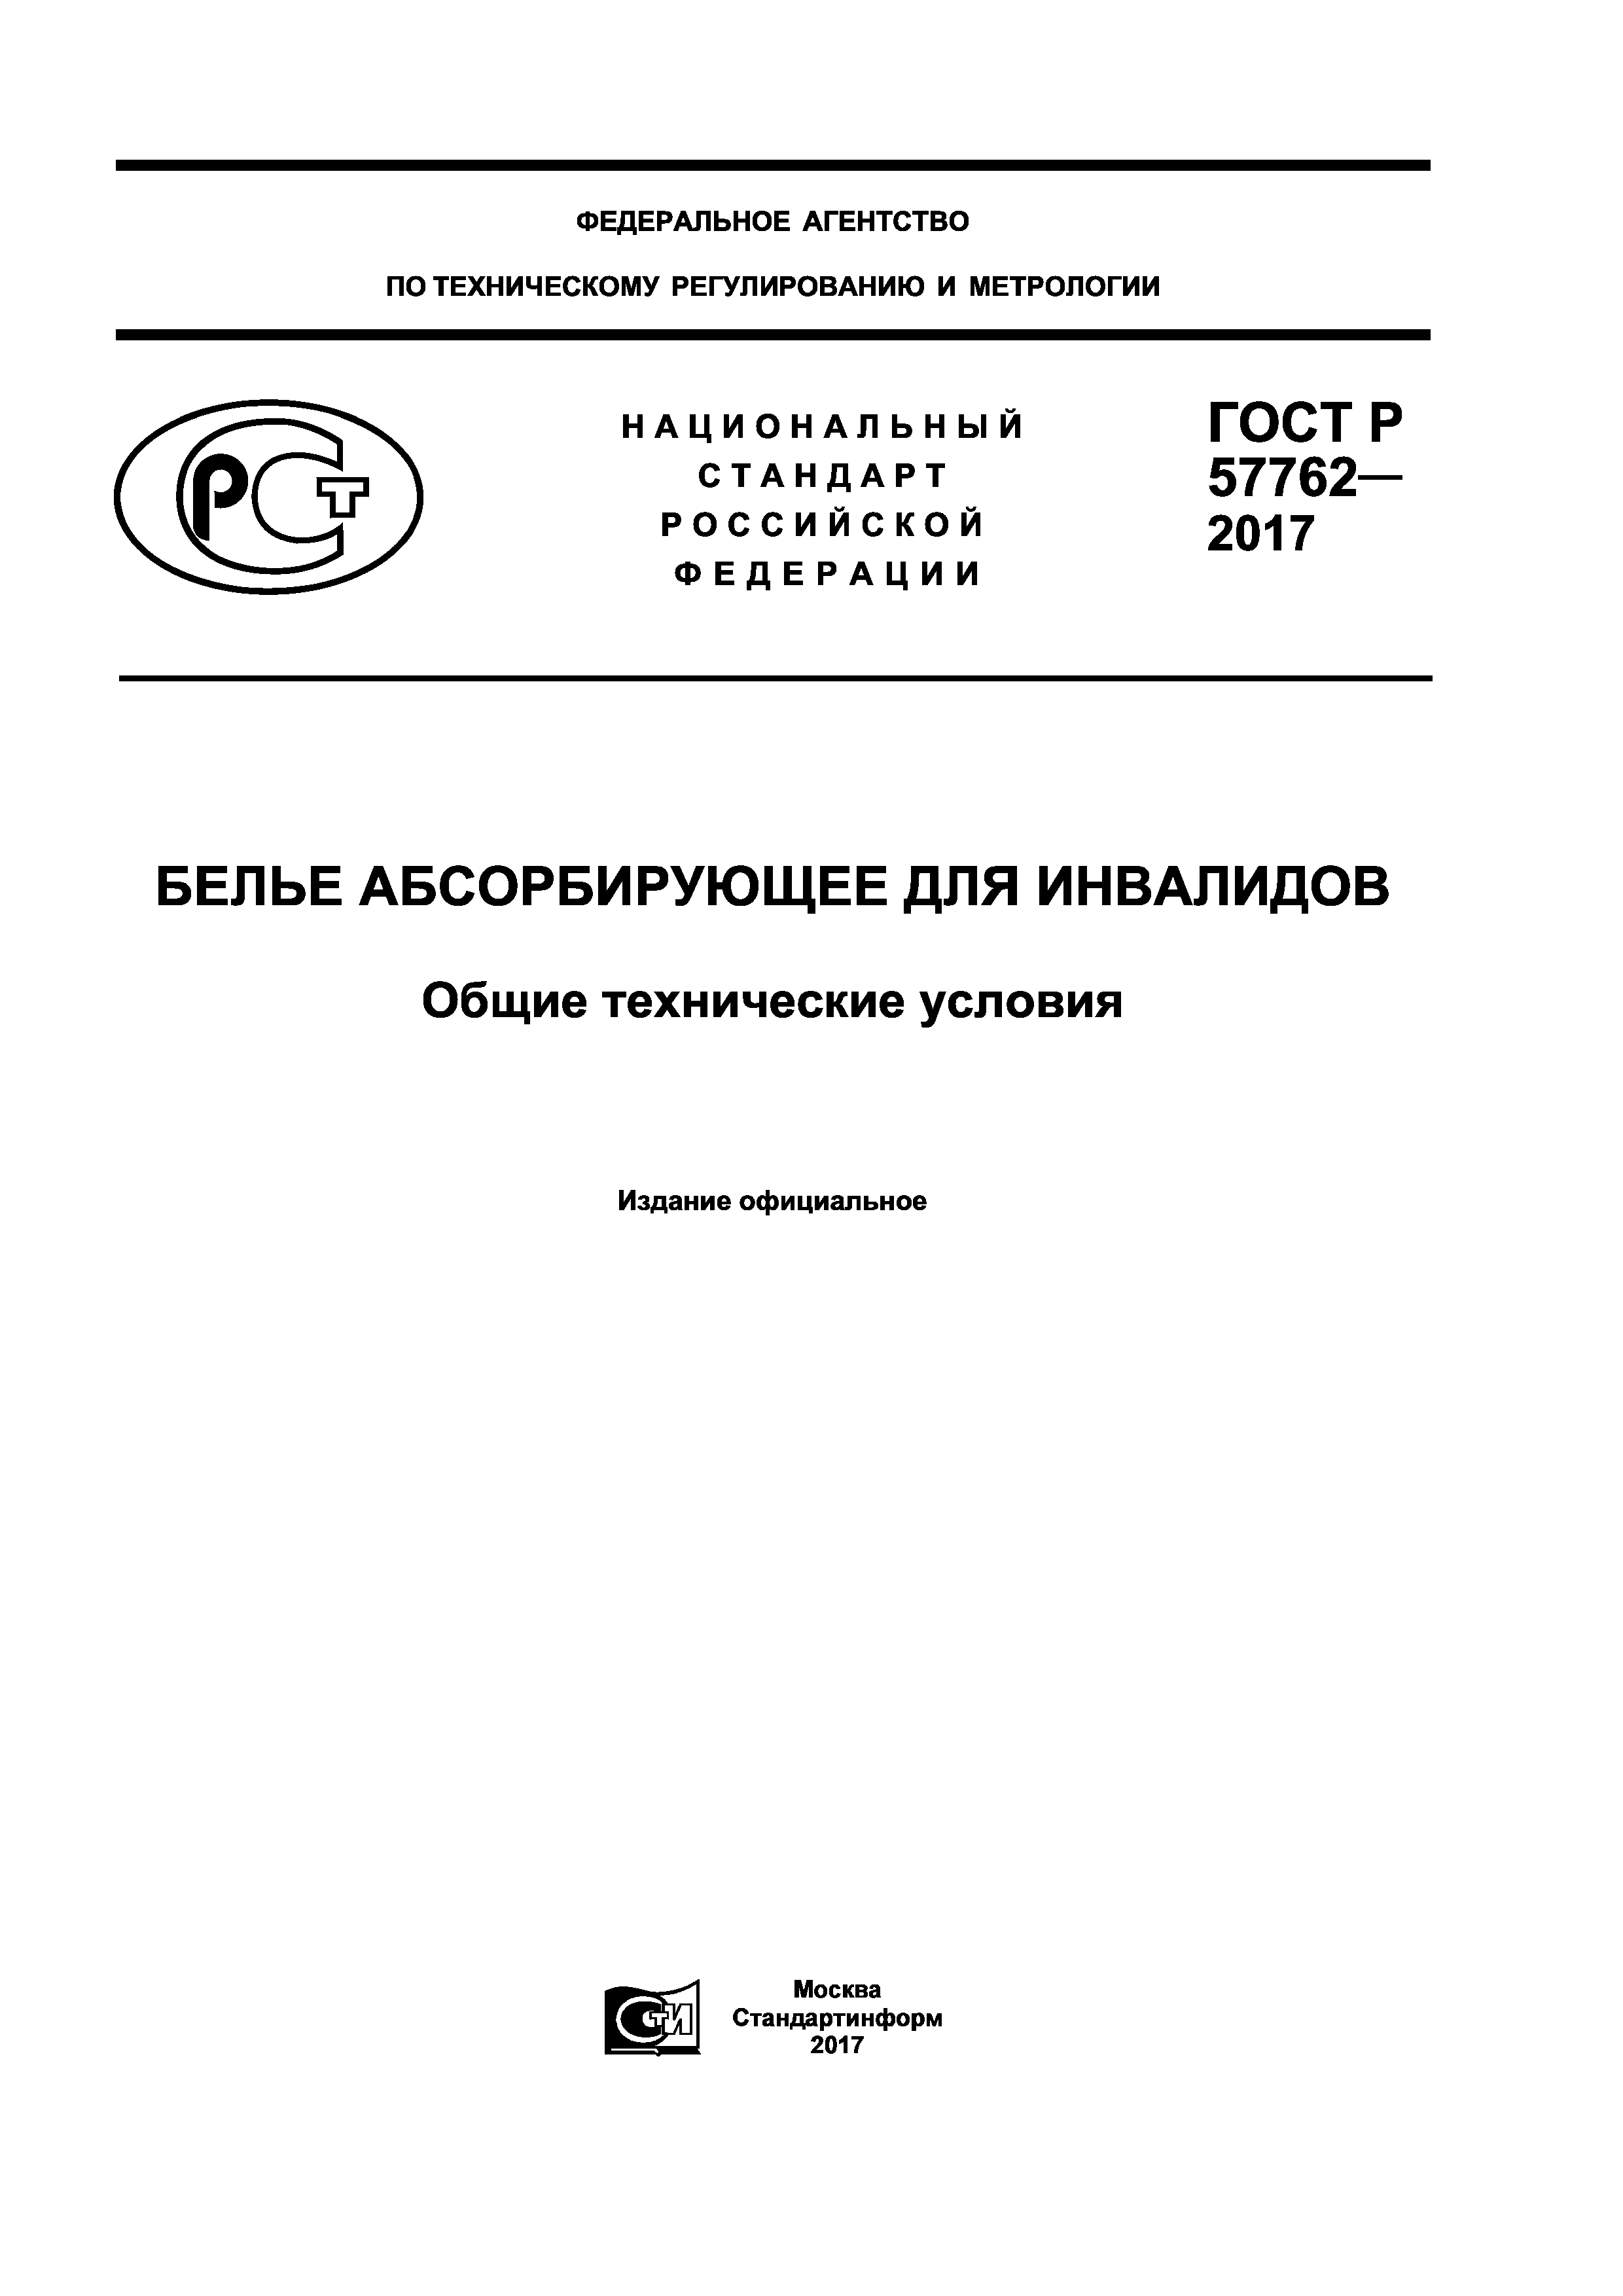 ГОСТ Р 57762-2017